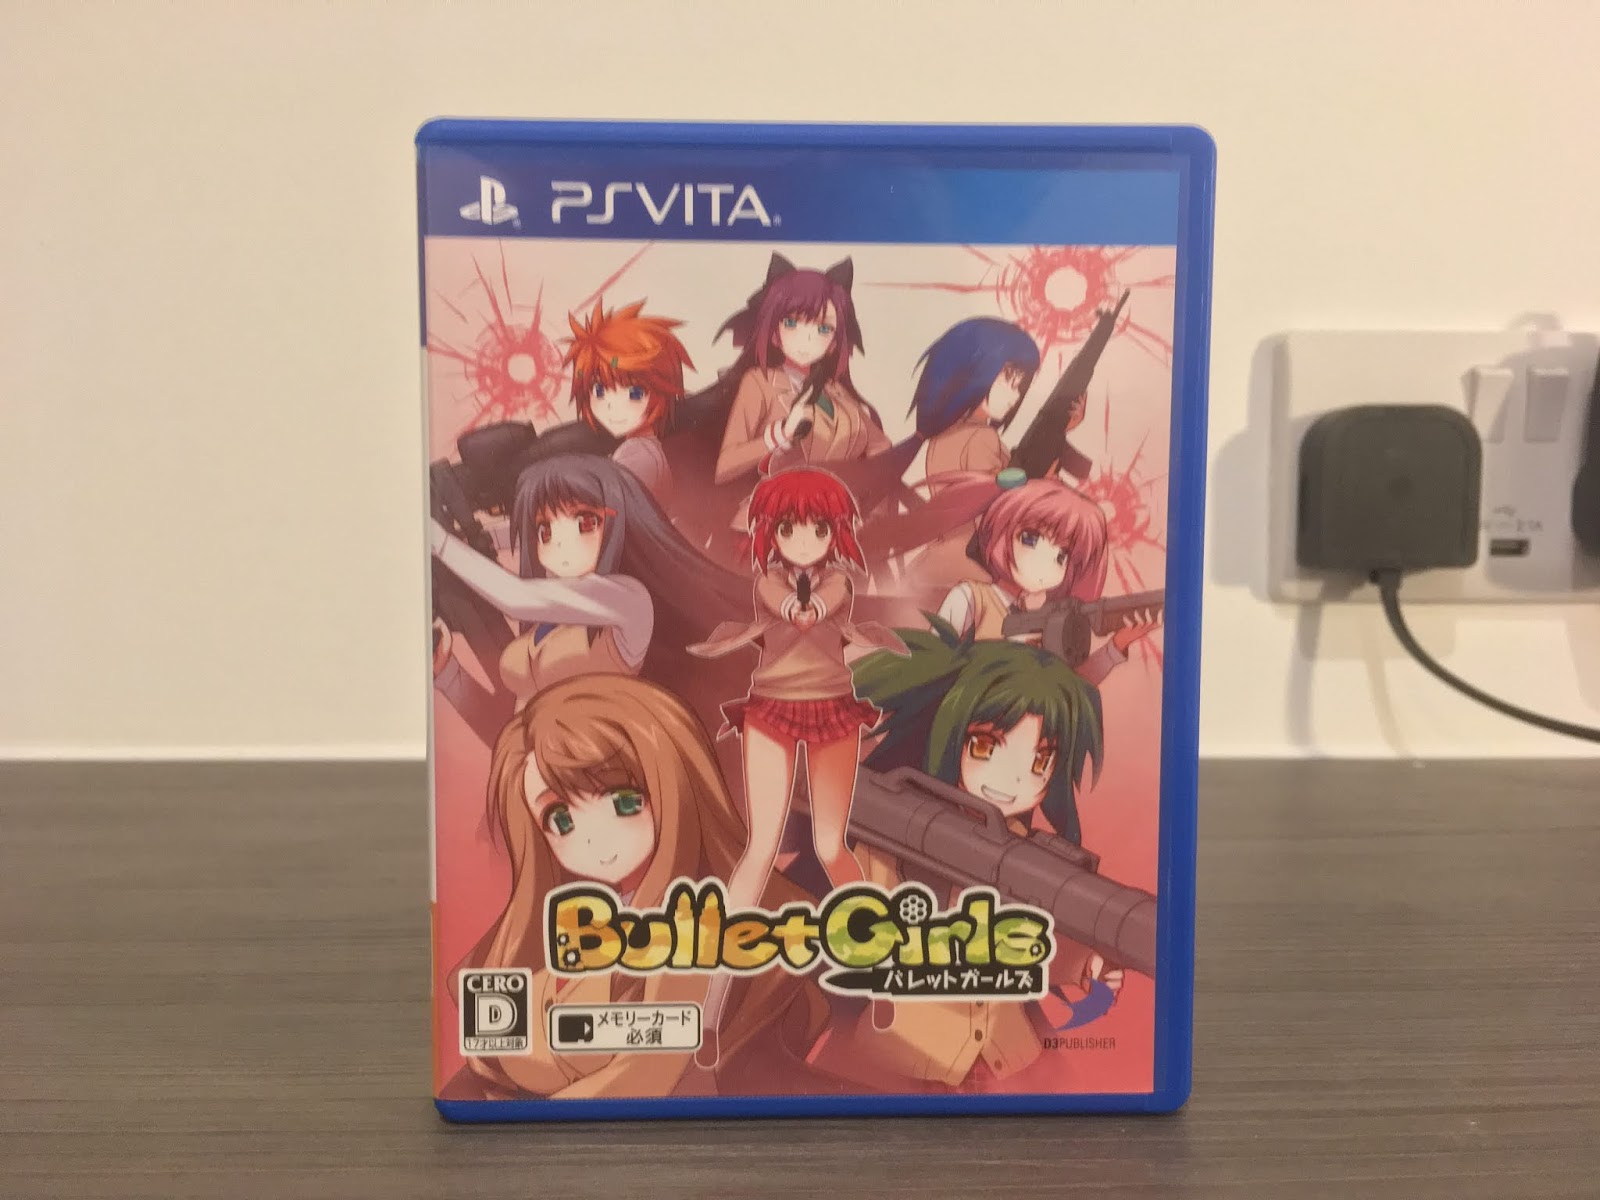 PS Vita Bullet Girls 2 Playstation Vita Region Free Japan Import game soft